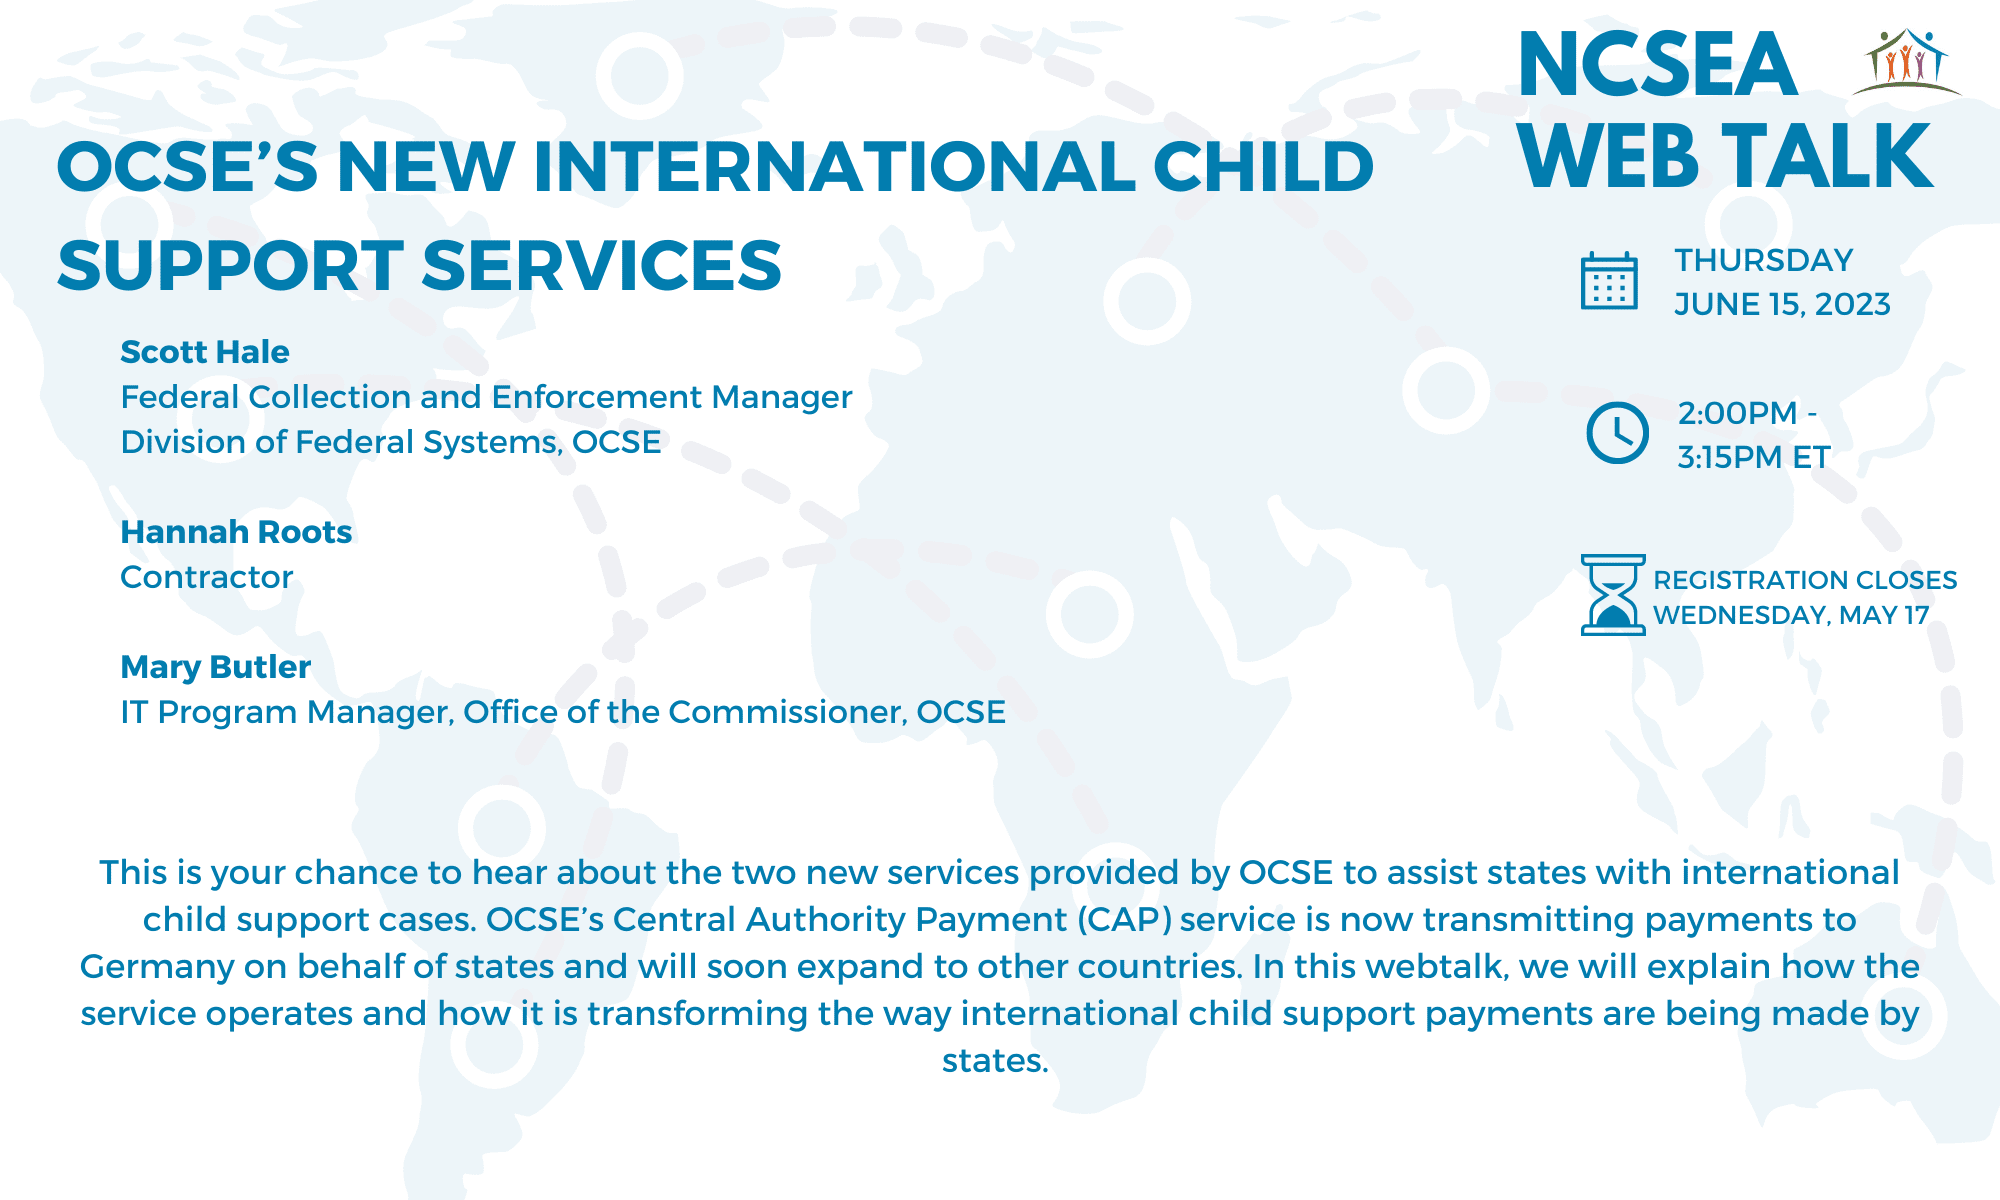 NCSEA Web Talk: OCSE’s New International Child Support Services